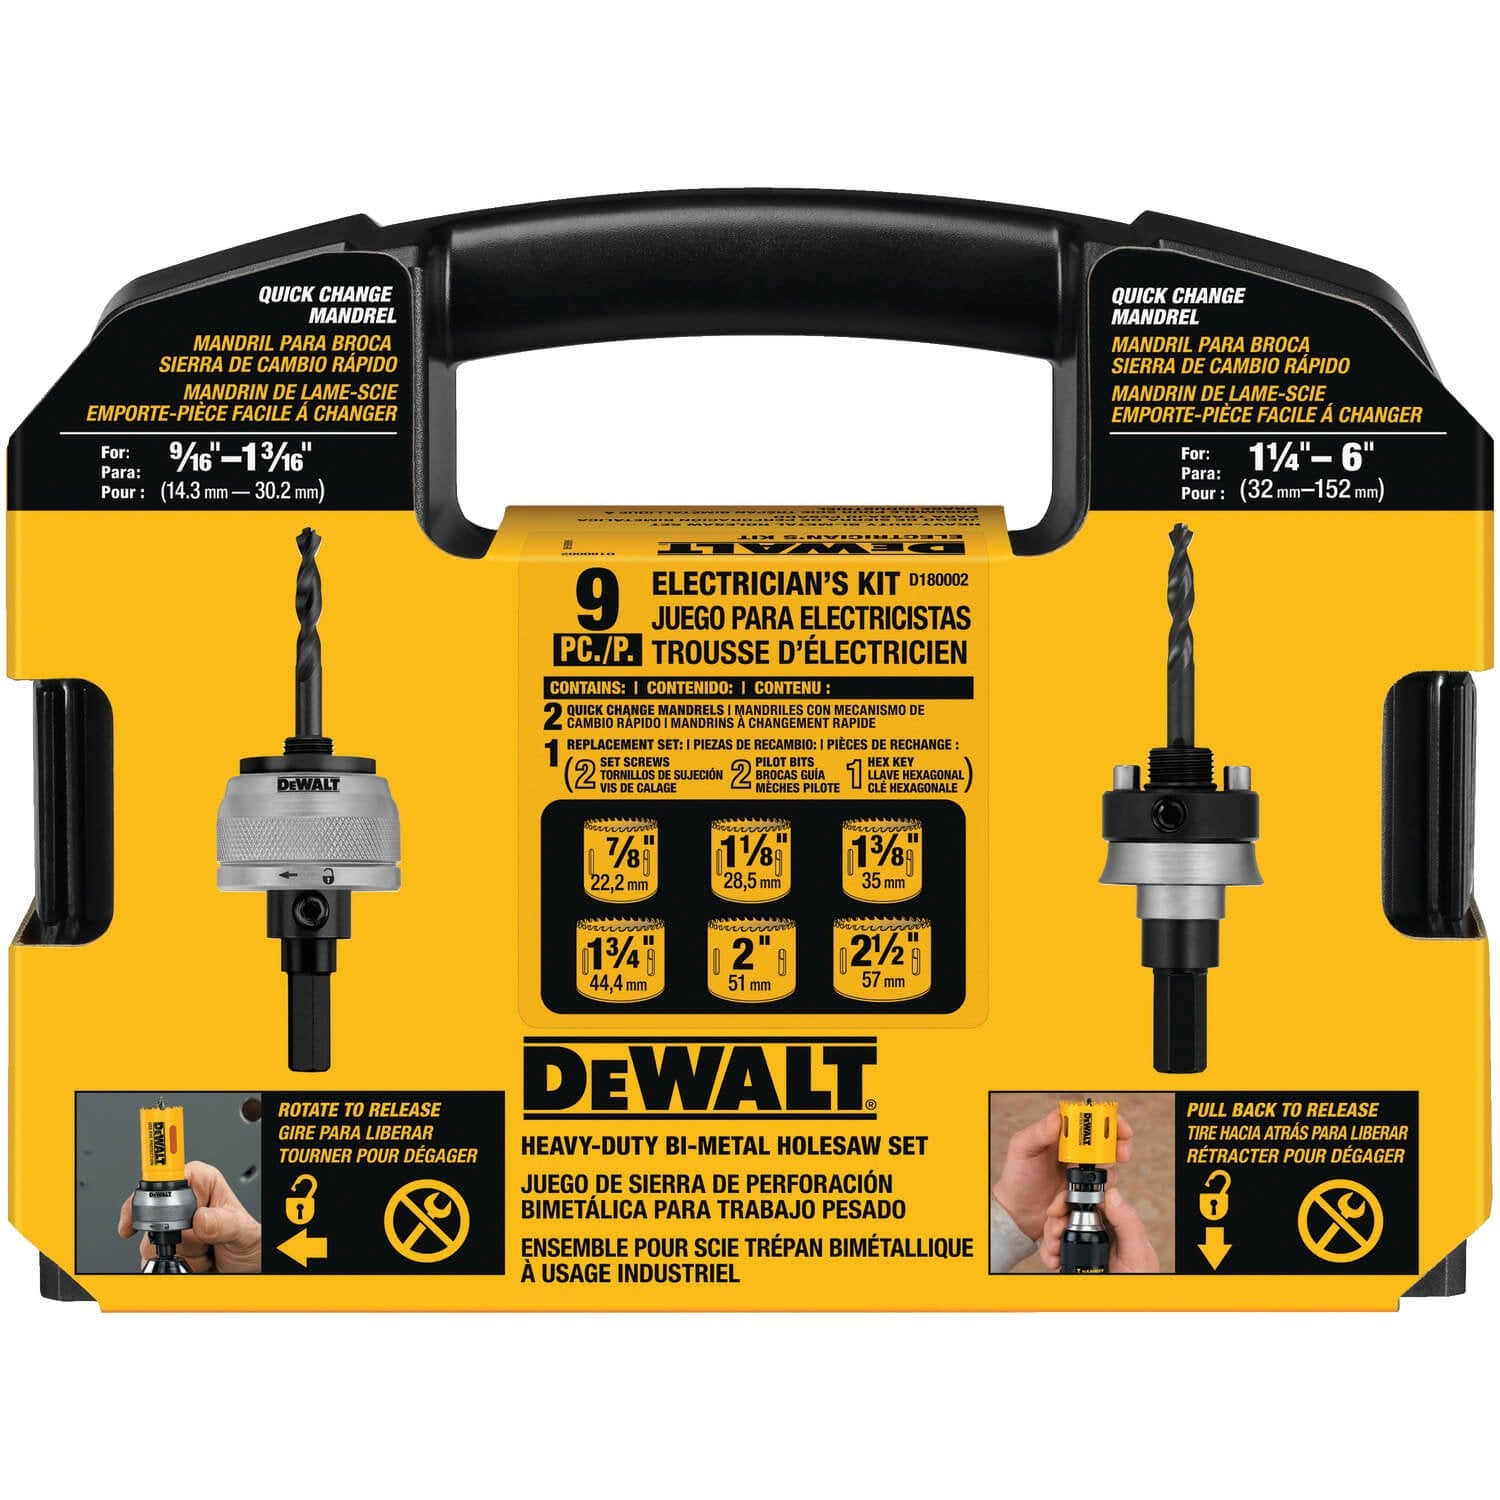 DEWALT D180002 Standard Electricians Bi-Metal Hole Saw Kit